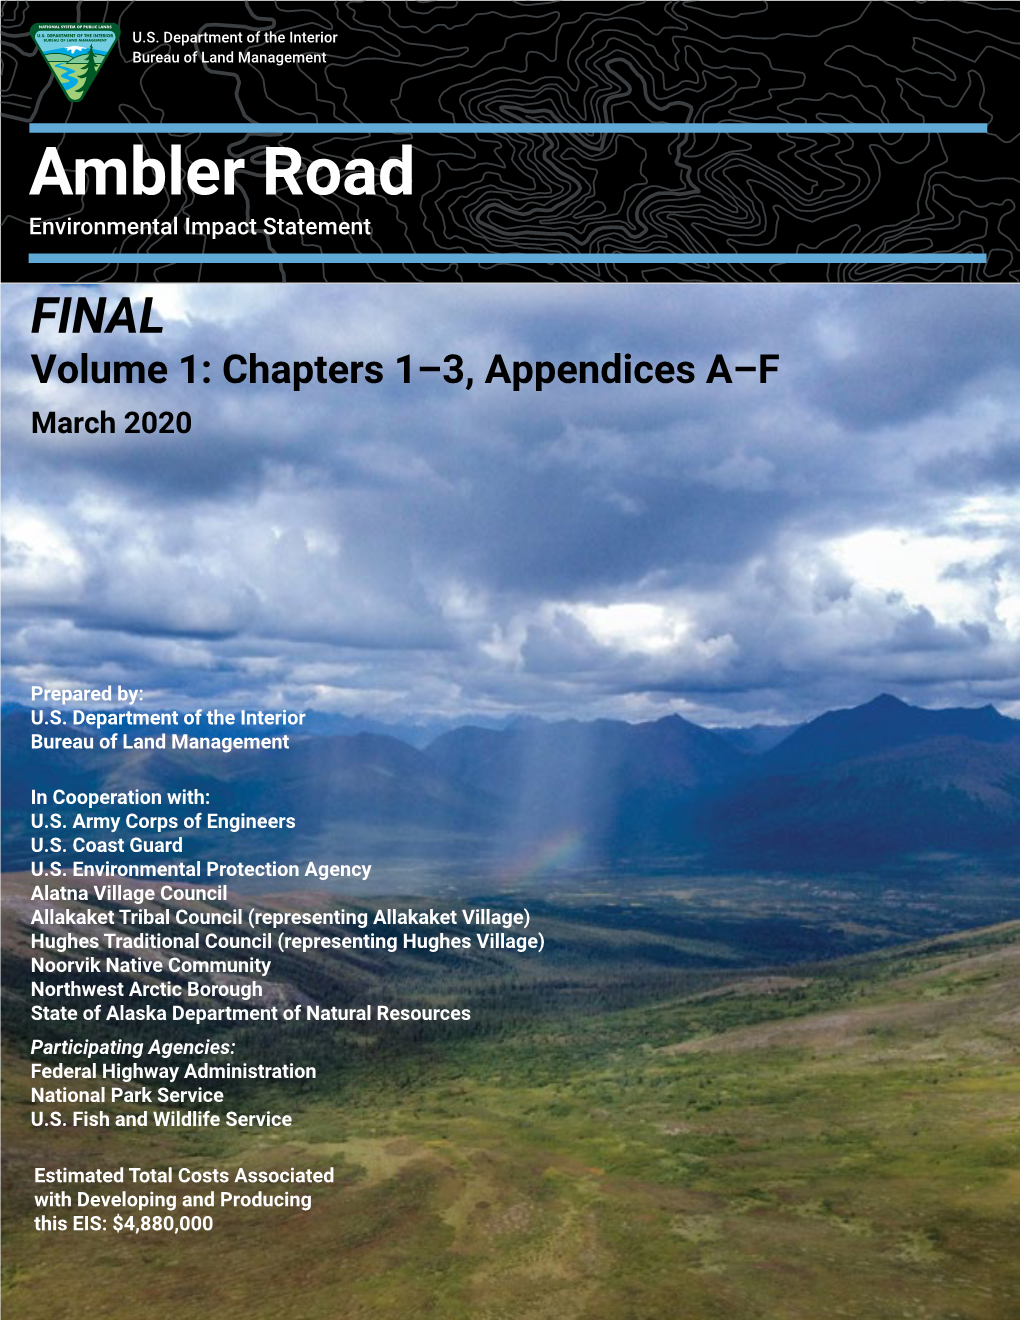 Ambler Road Final EIS Volume 1